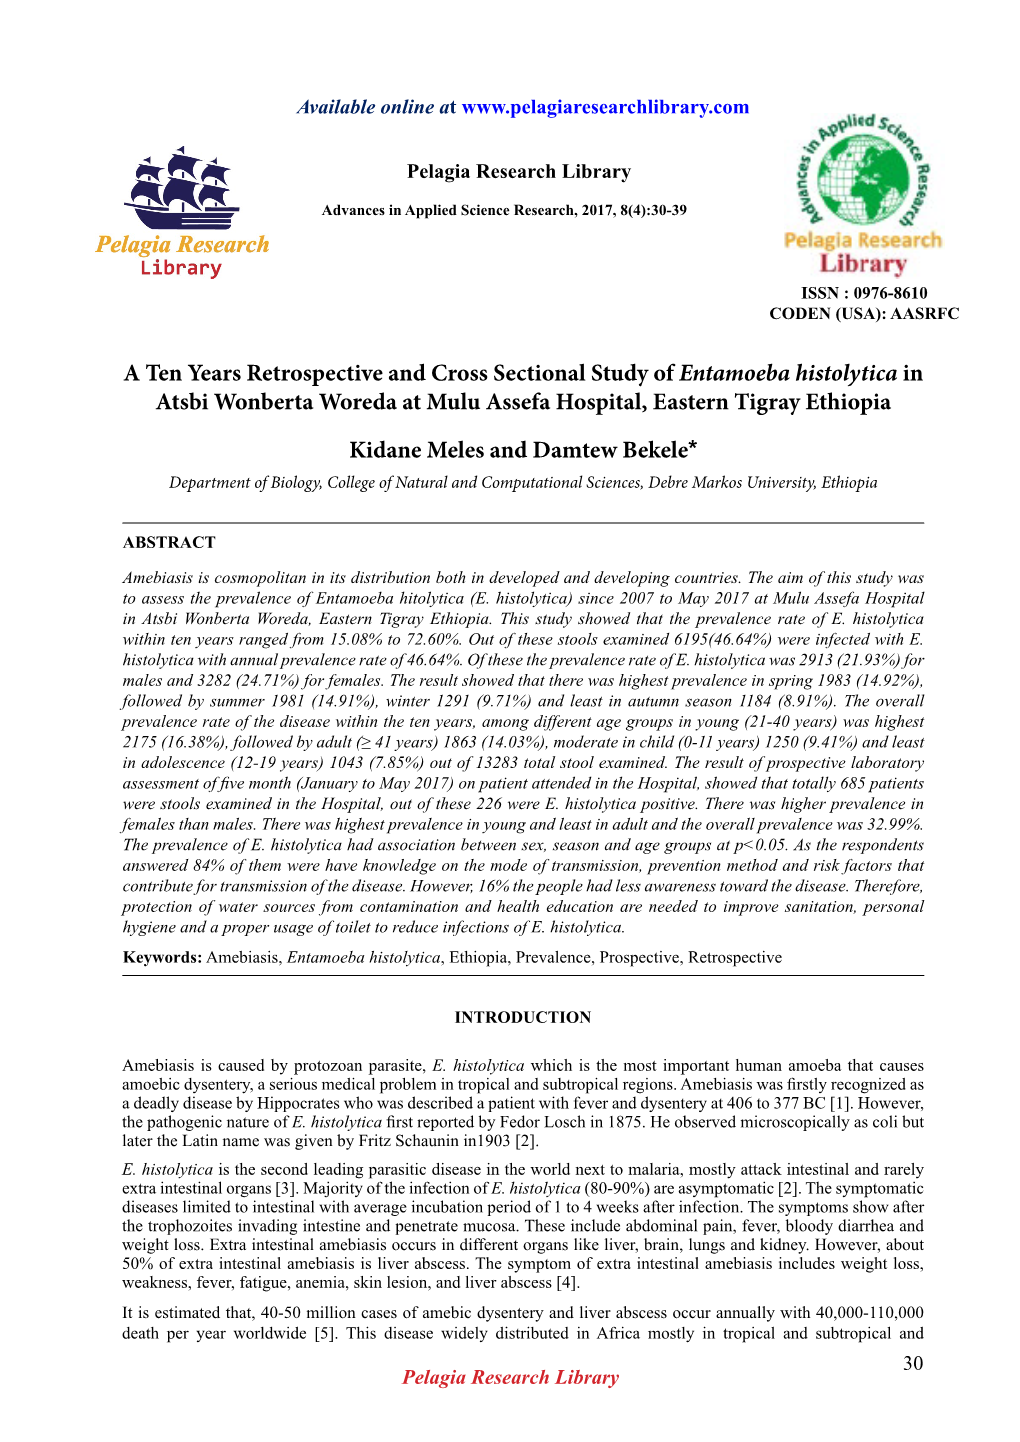 A Ten Years Retrospective and Cross Sectional Study of Entamoeba Histolytica in Atsbi Wonberta Woreda at Mulu Assefa Hospital, Eastern Tigray Ethiopia